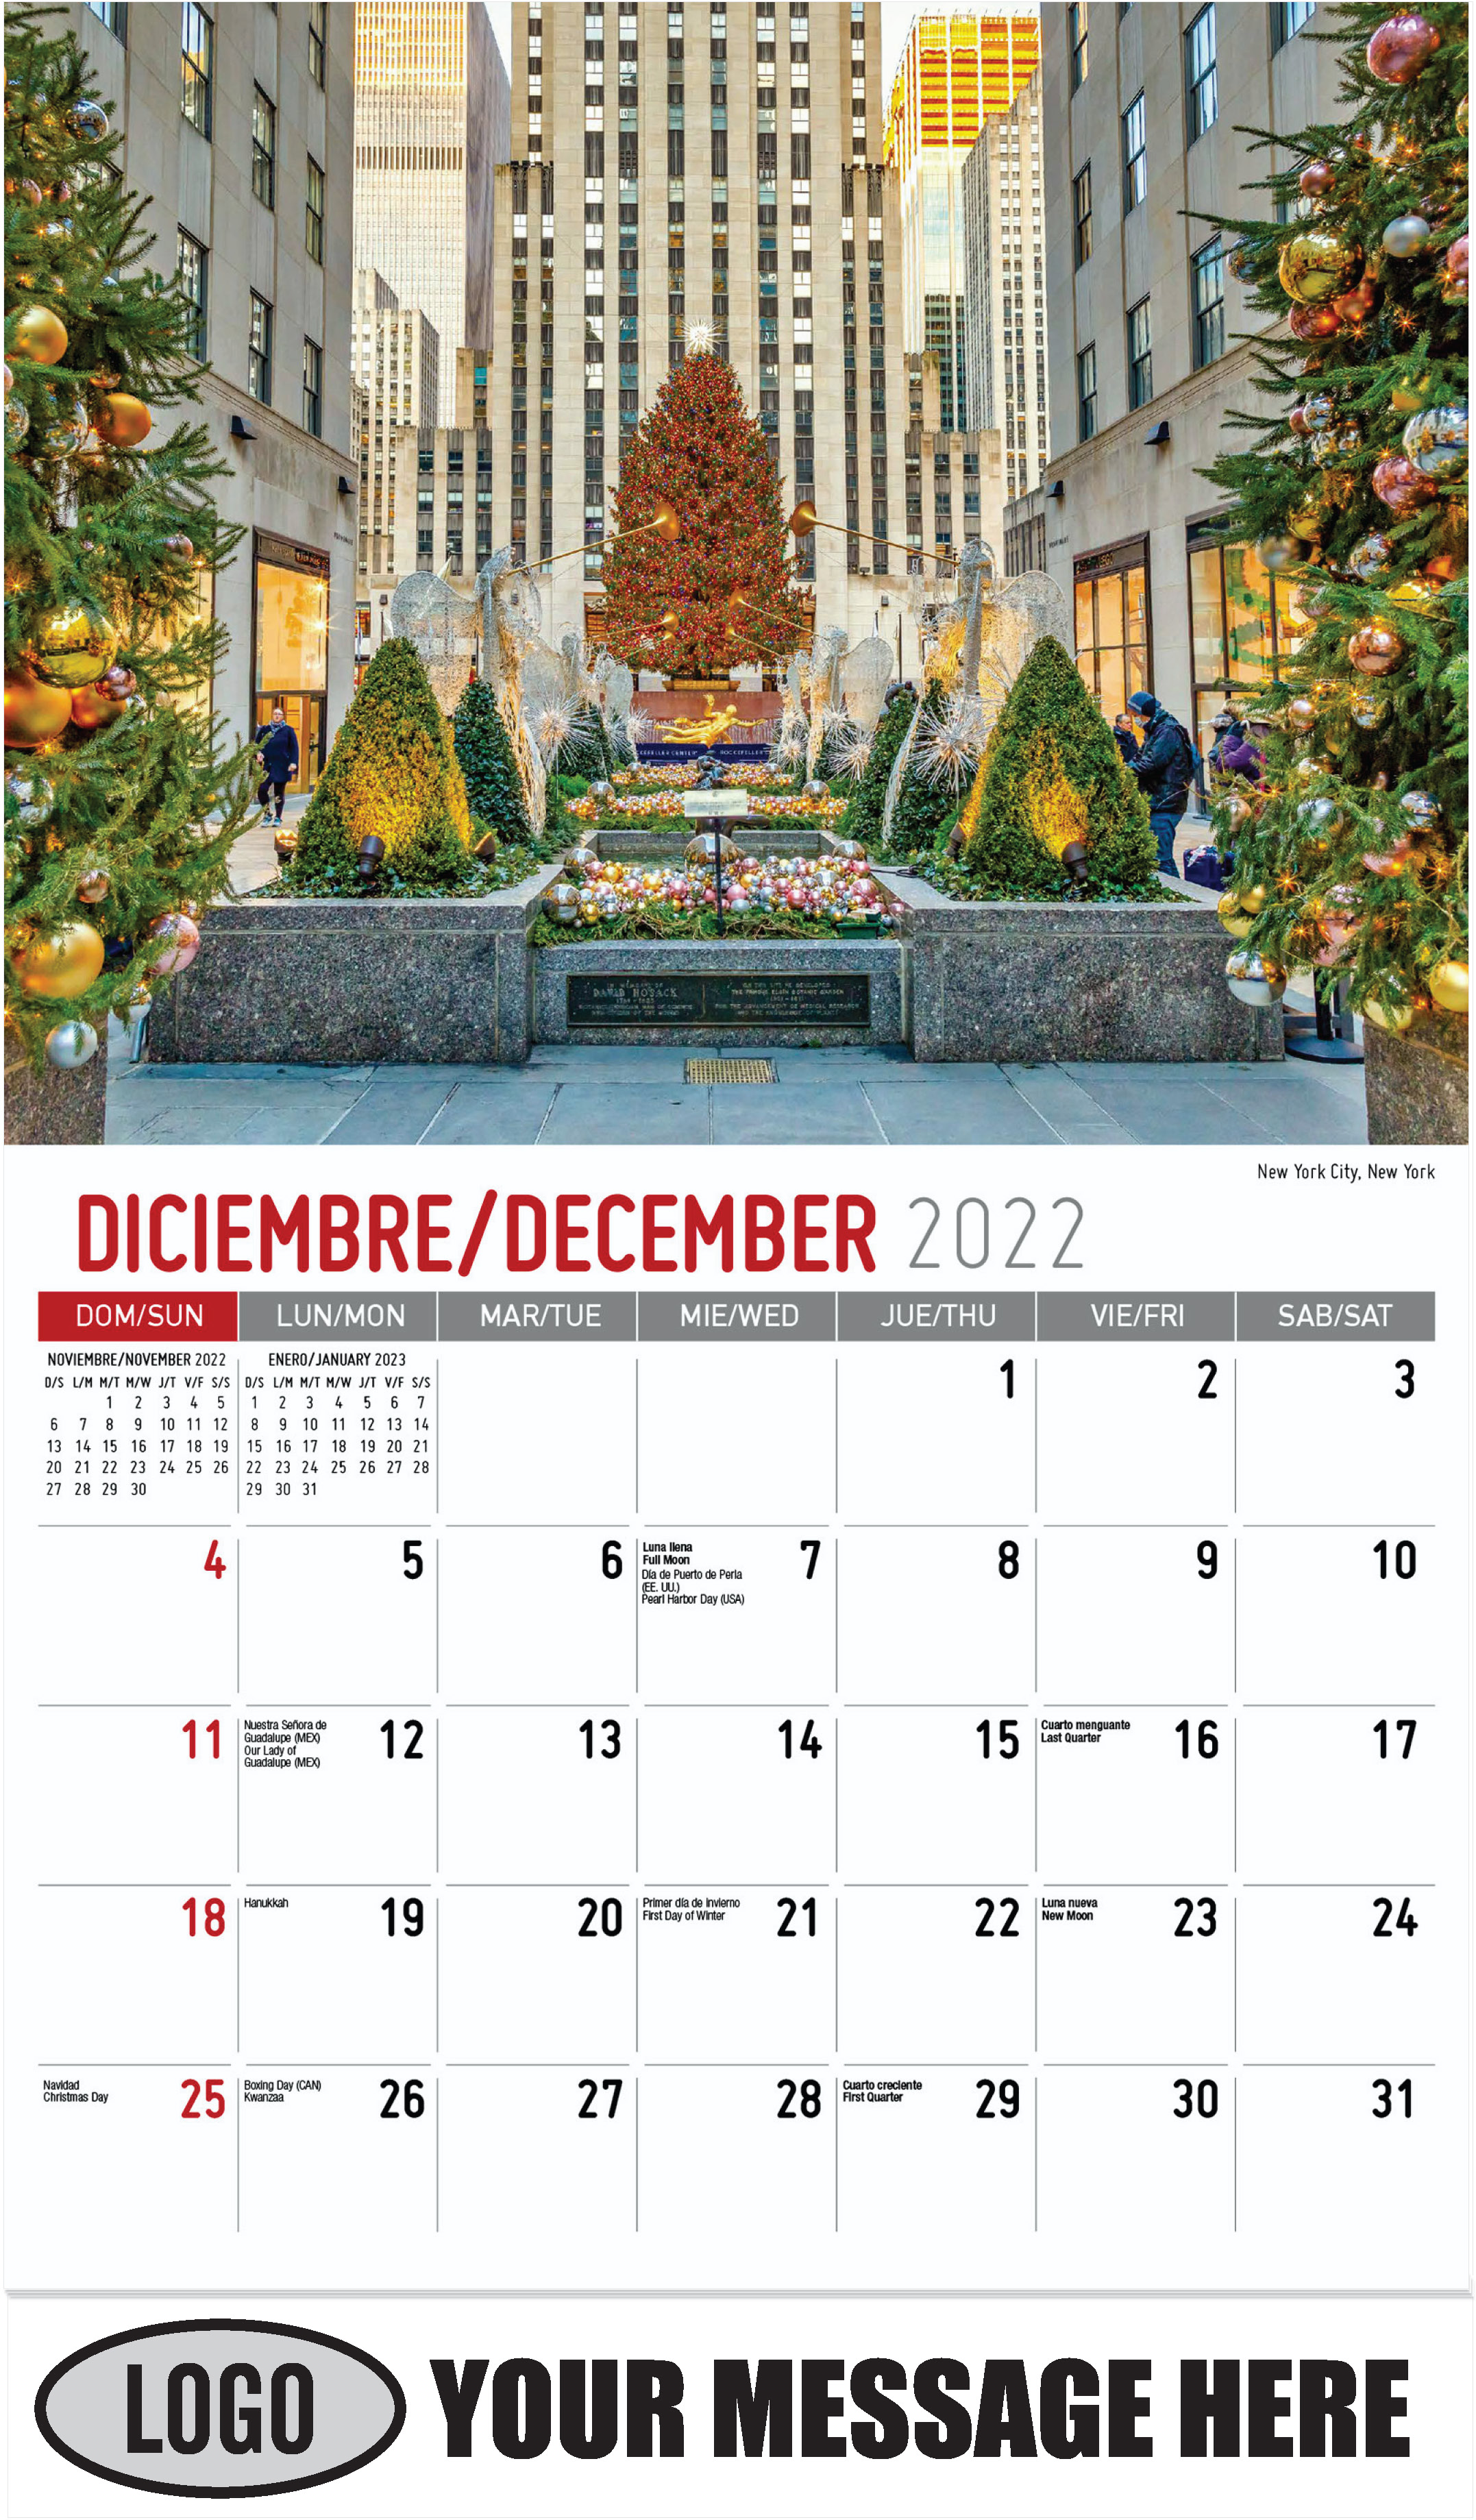 New York City, New York - December 2022 - Scenes of America (Spanish-English bilingual) 2023 Promotional Calendar